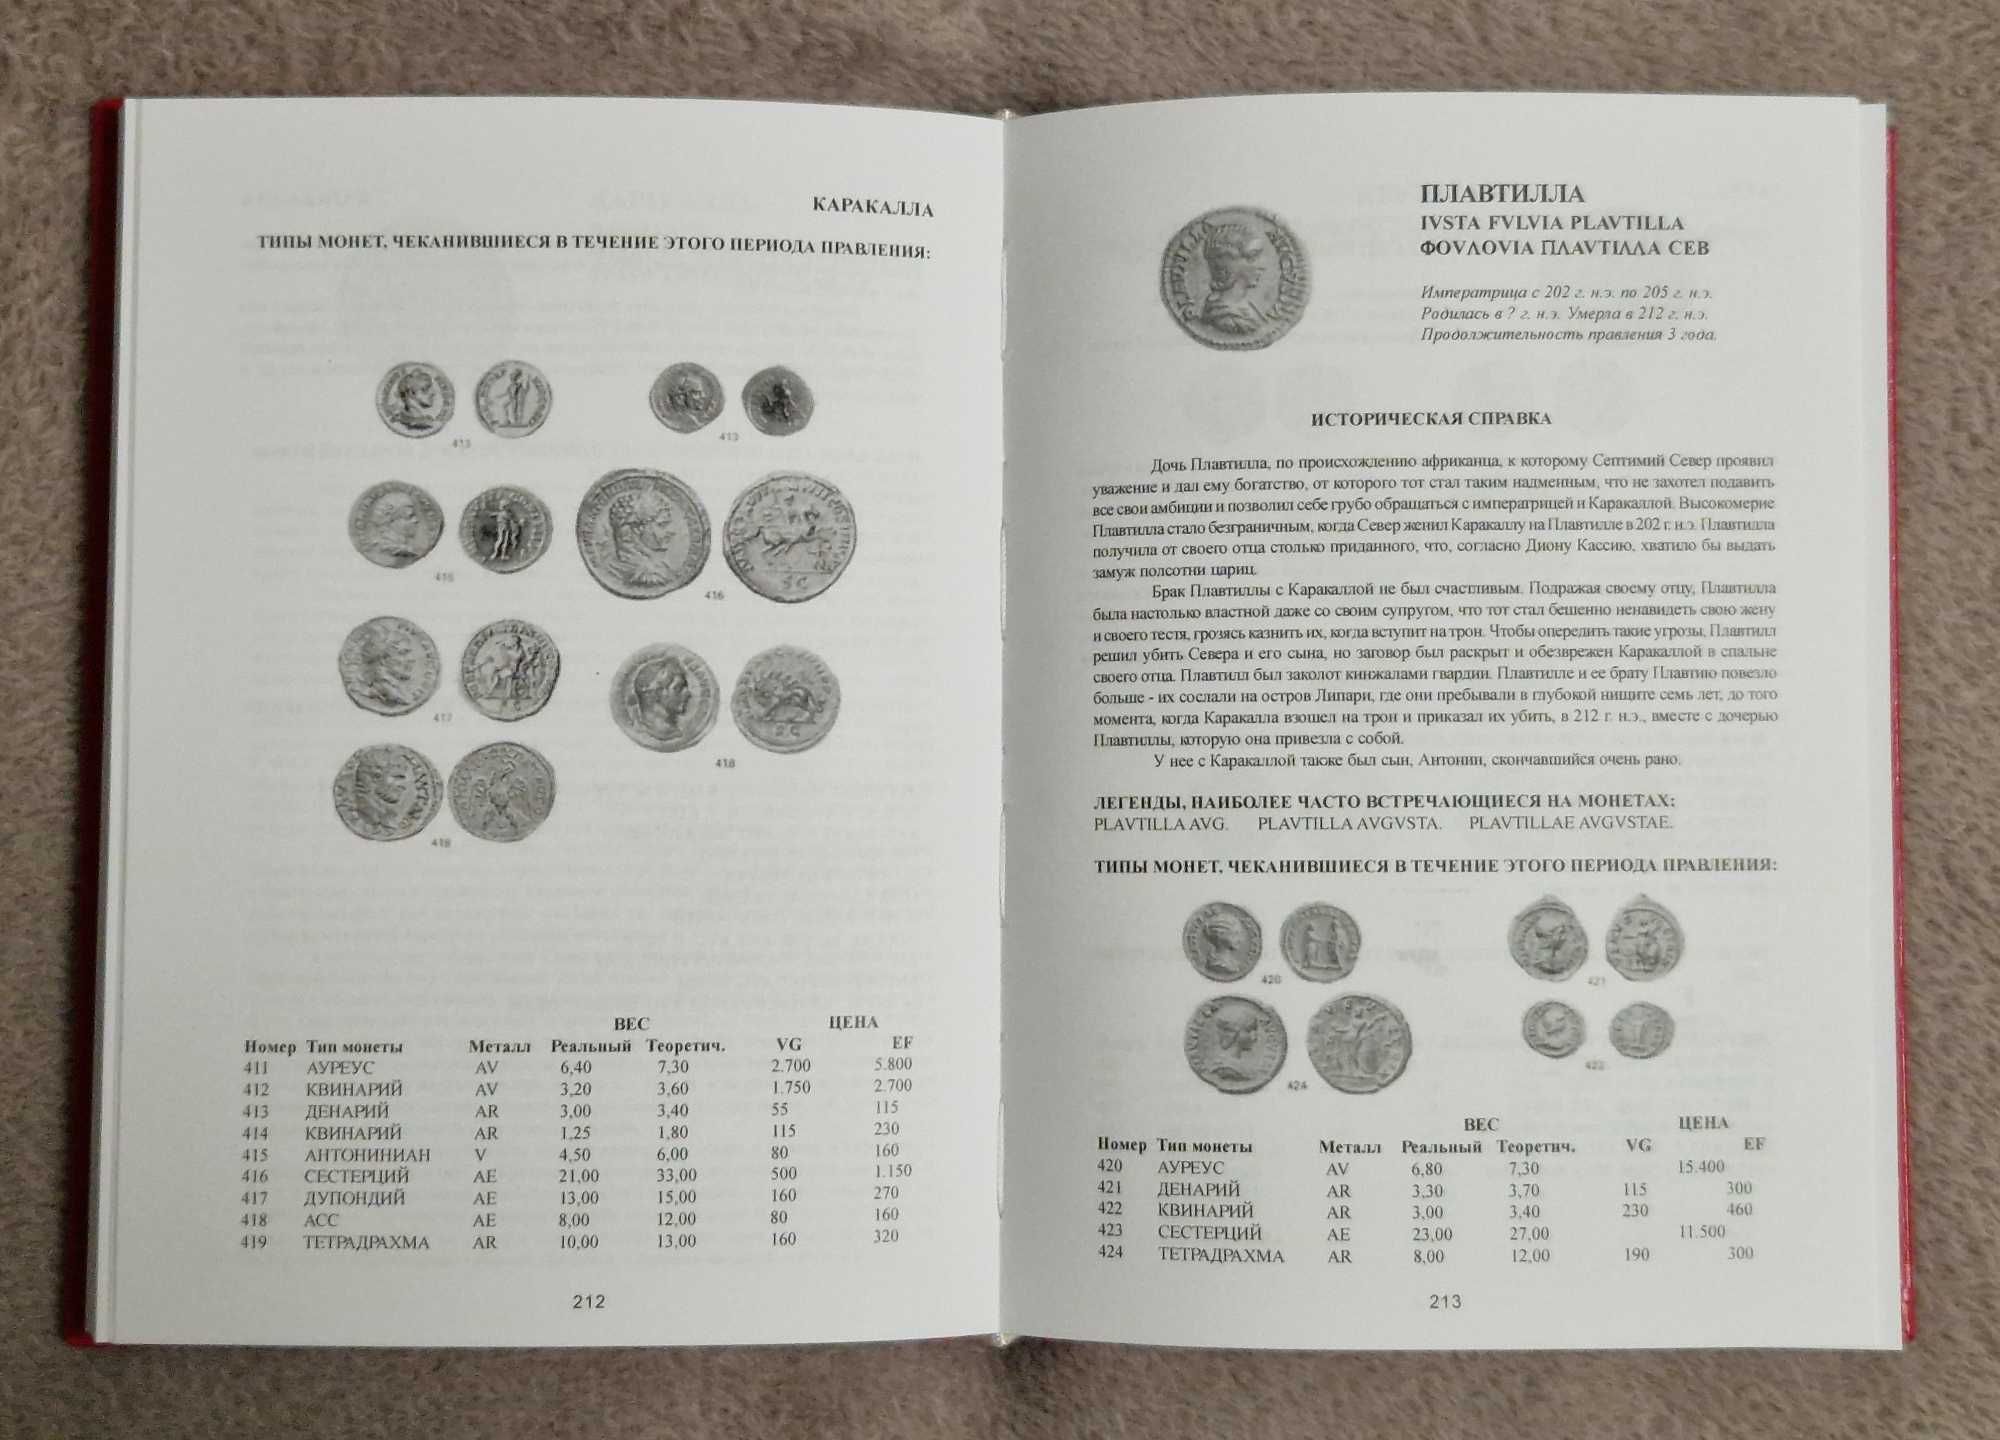 Римские императорские монеты - Карлос Кастан, Карлос Фустер